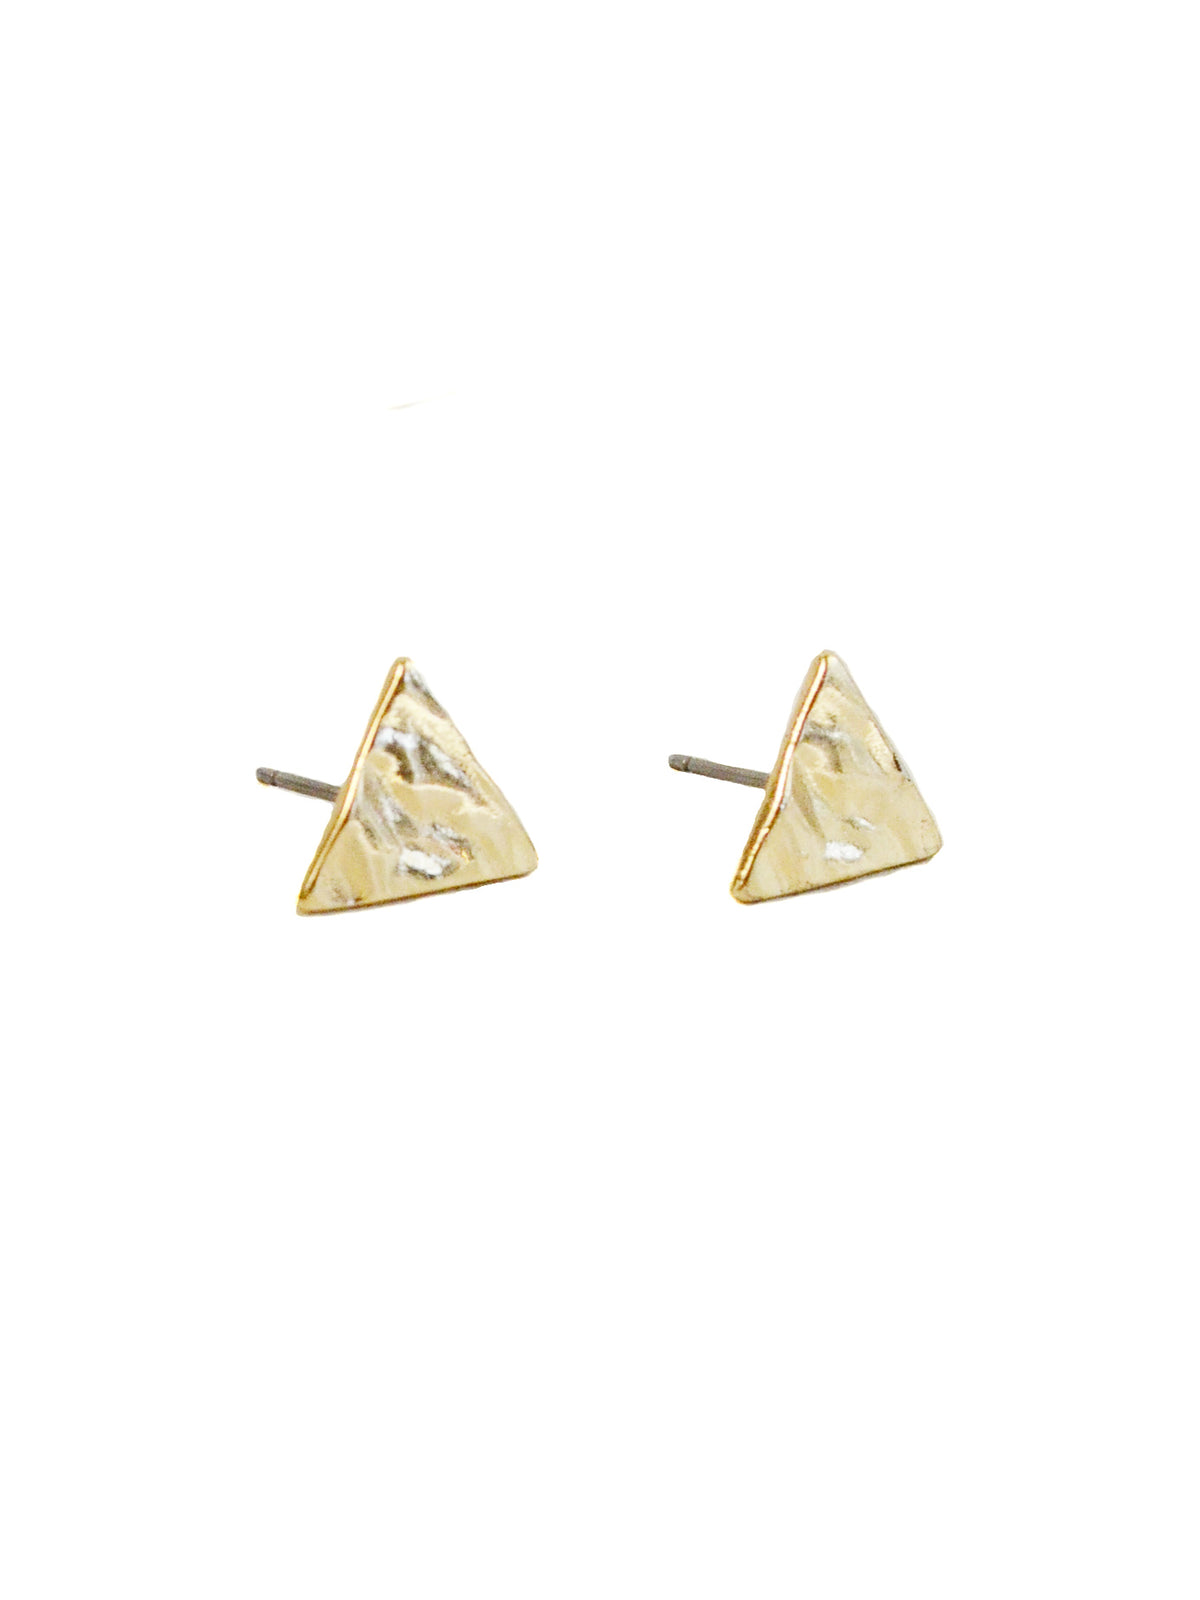 small gold triangle fashion stud earrings, geometric triangle stud 